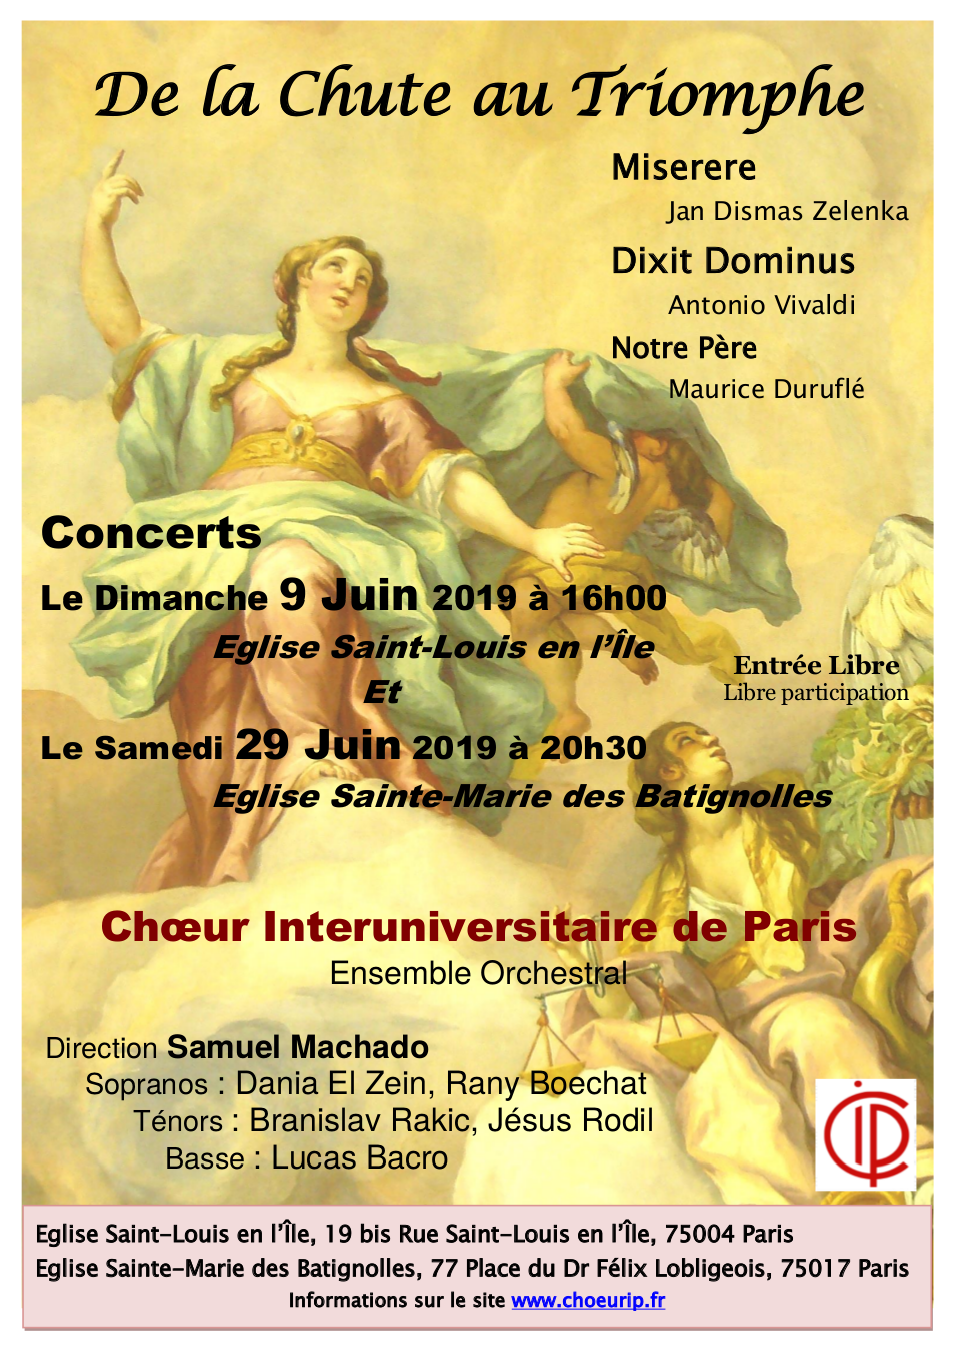 Concerts baroques de juin 2019 : Vivaldi et Zelenka